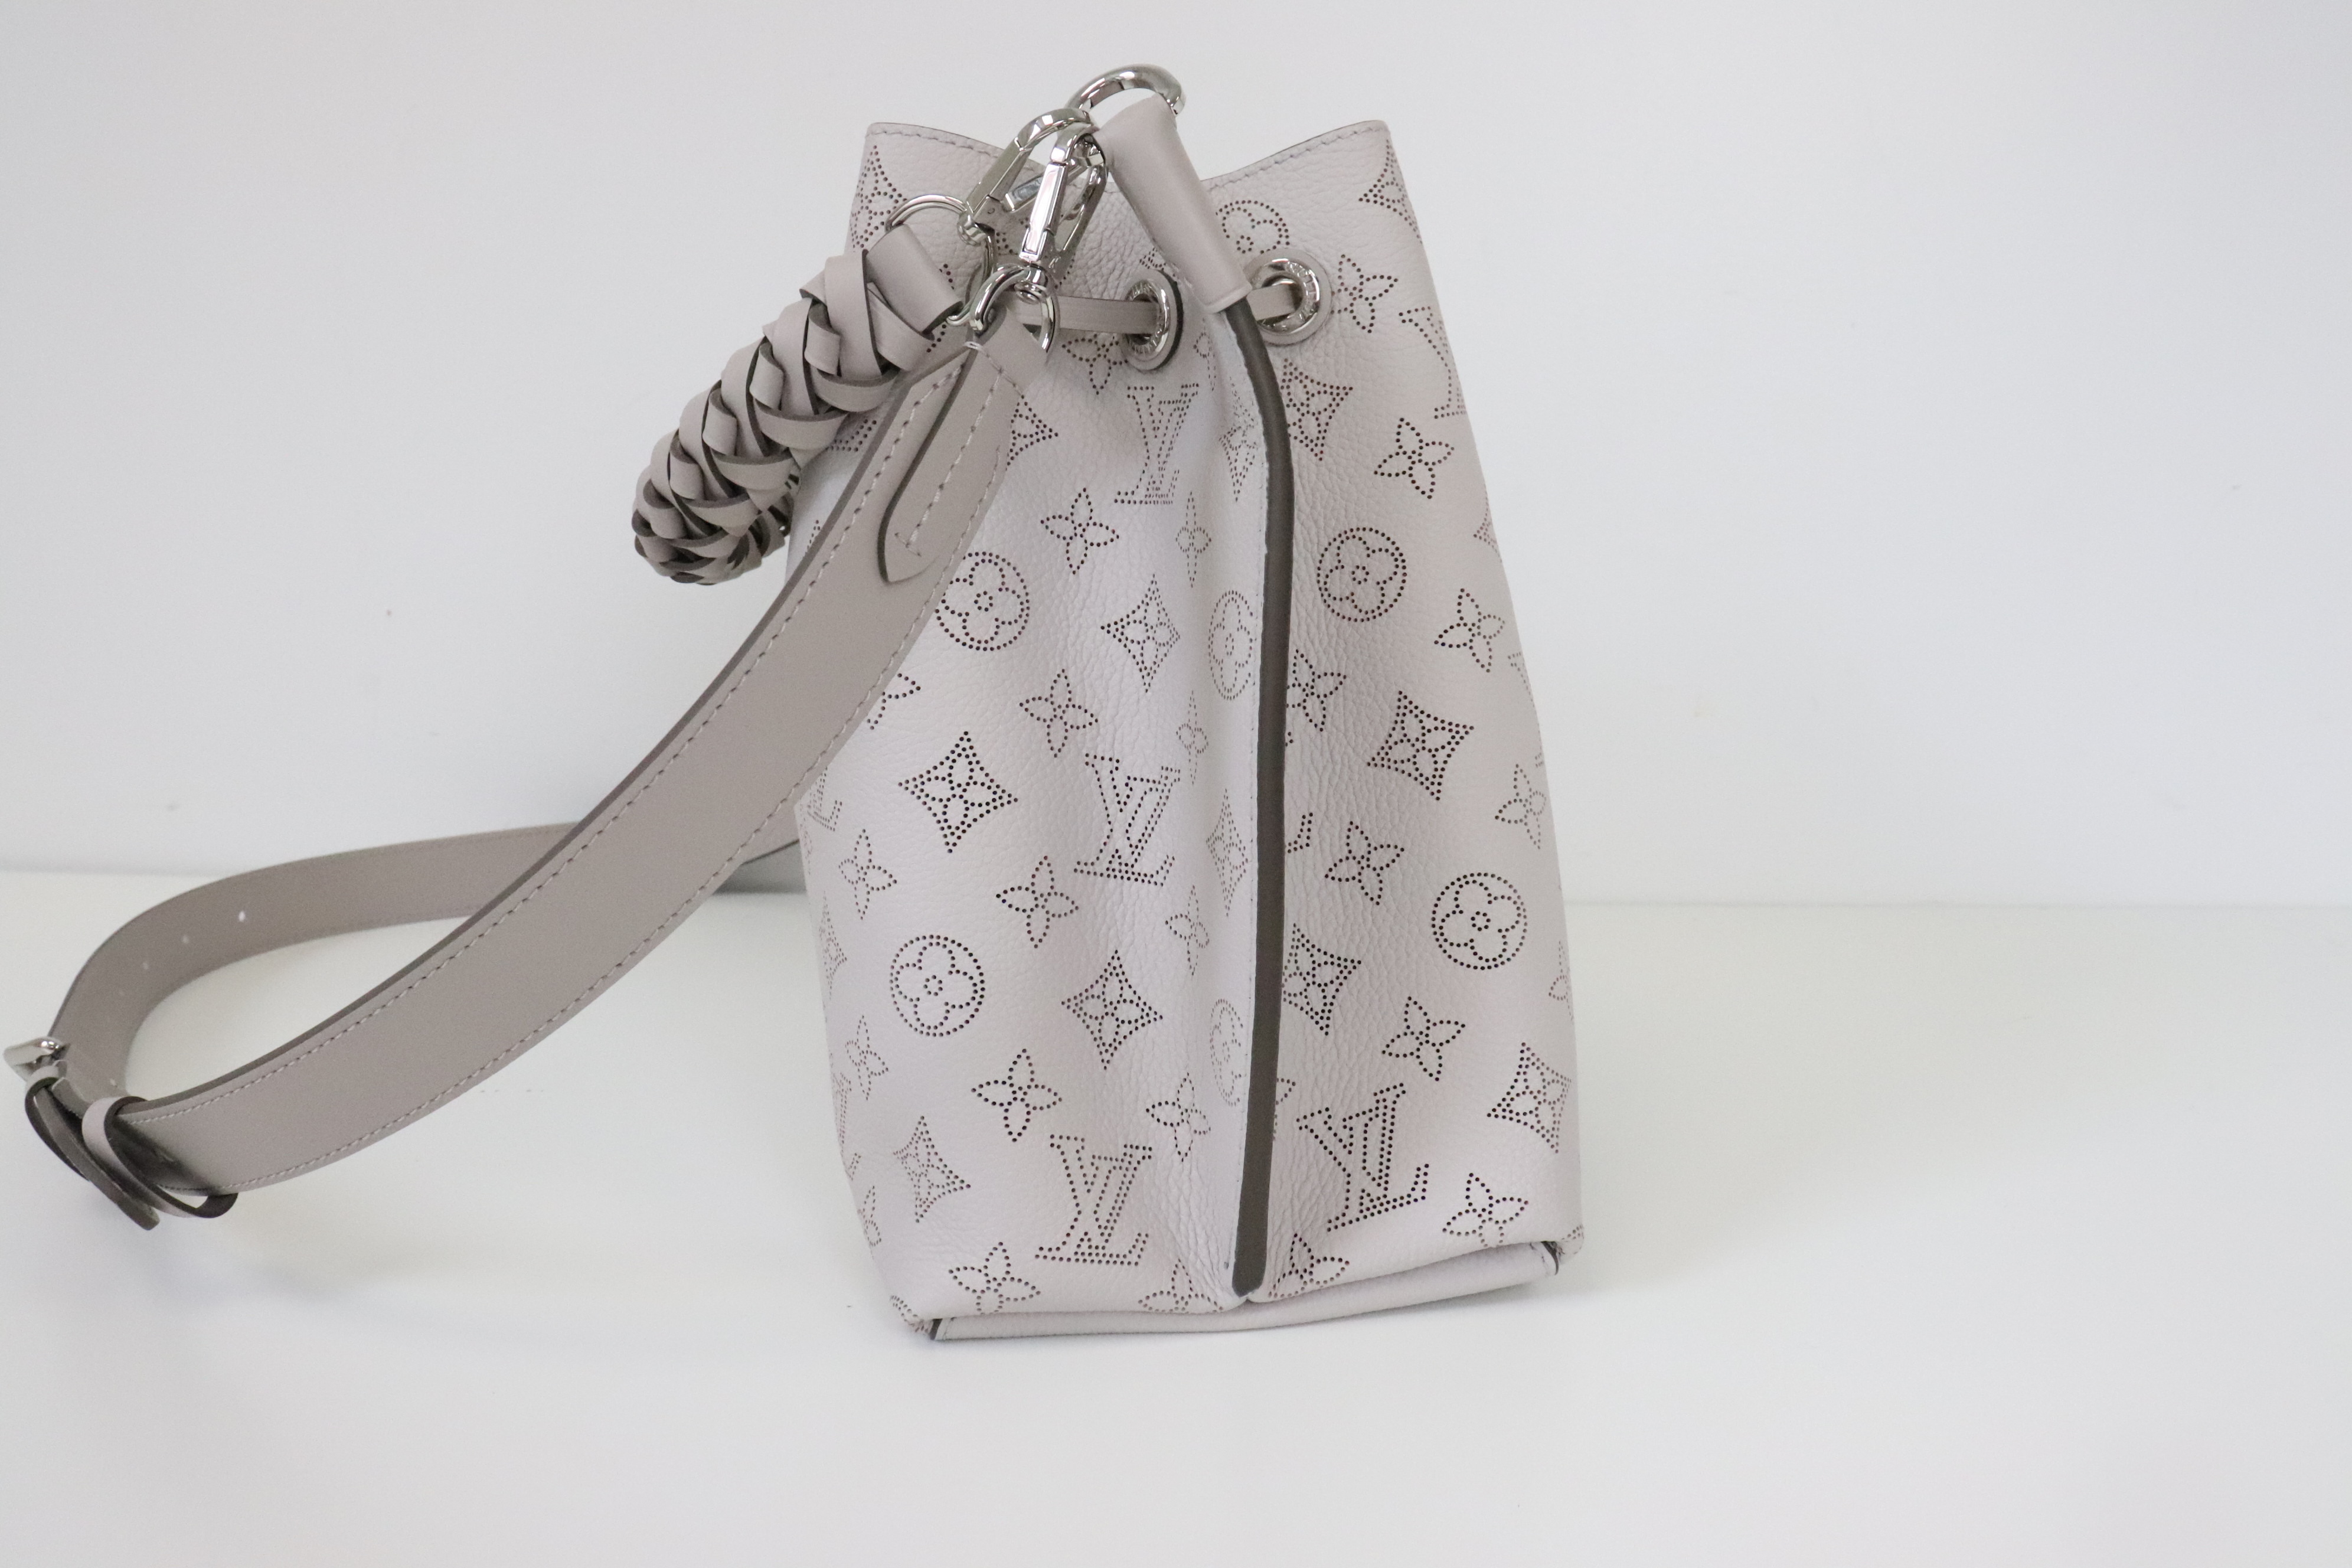 Louis Vuitton Muria Bucket Bag, New in Dustbag - Julia Rose Boston